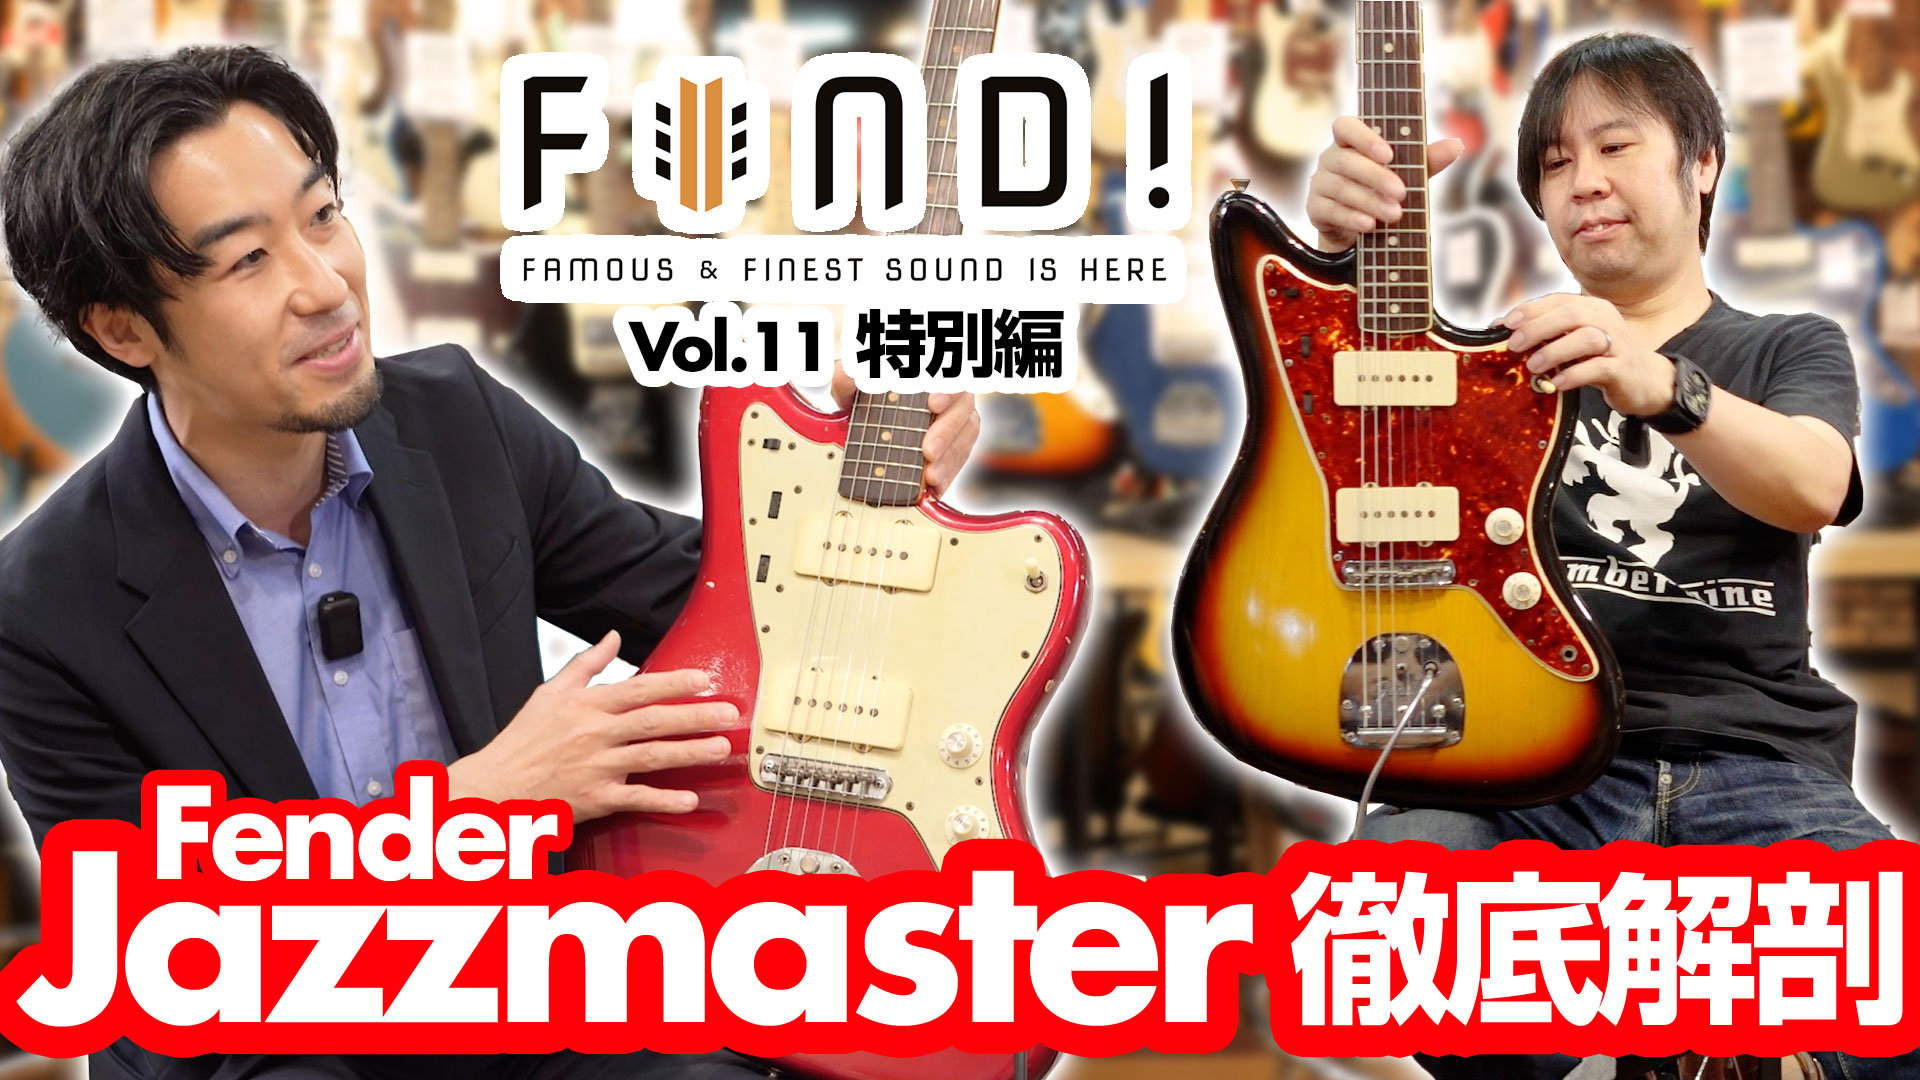 FIND! 特別編 Fender Jazzmaster 徹底解剖!!